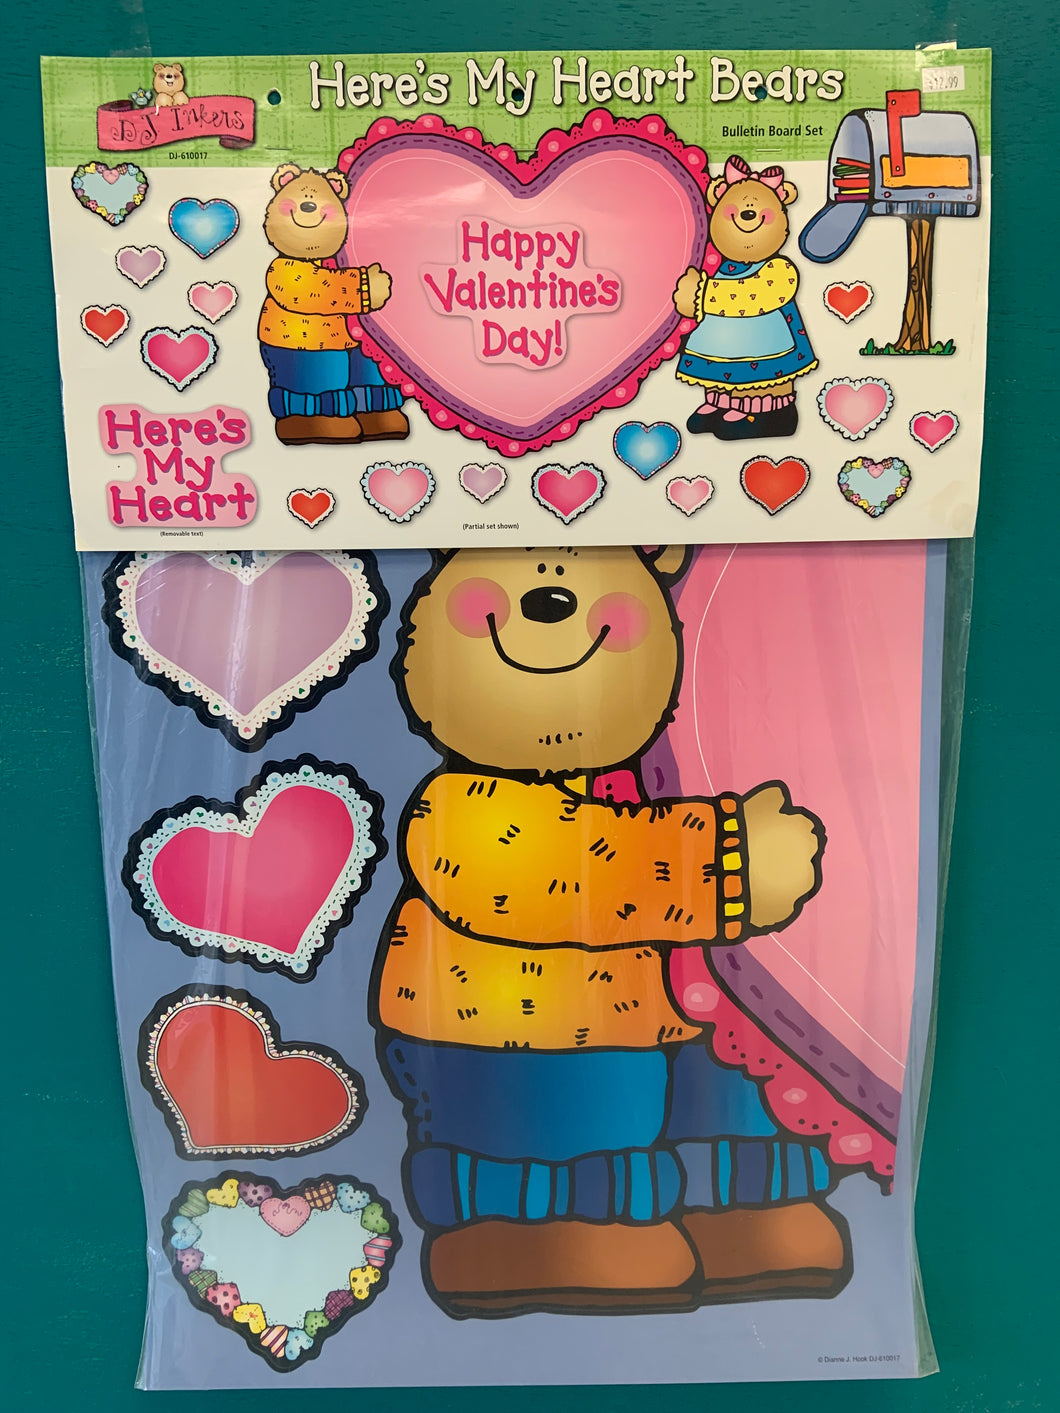 Here's My Heart Bears: Happy Valentines Day